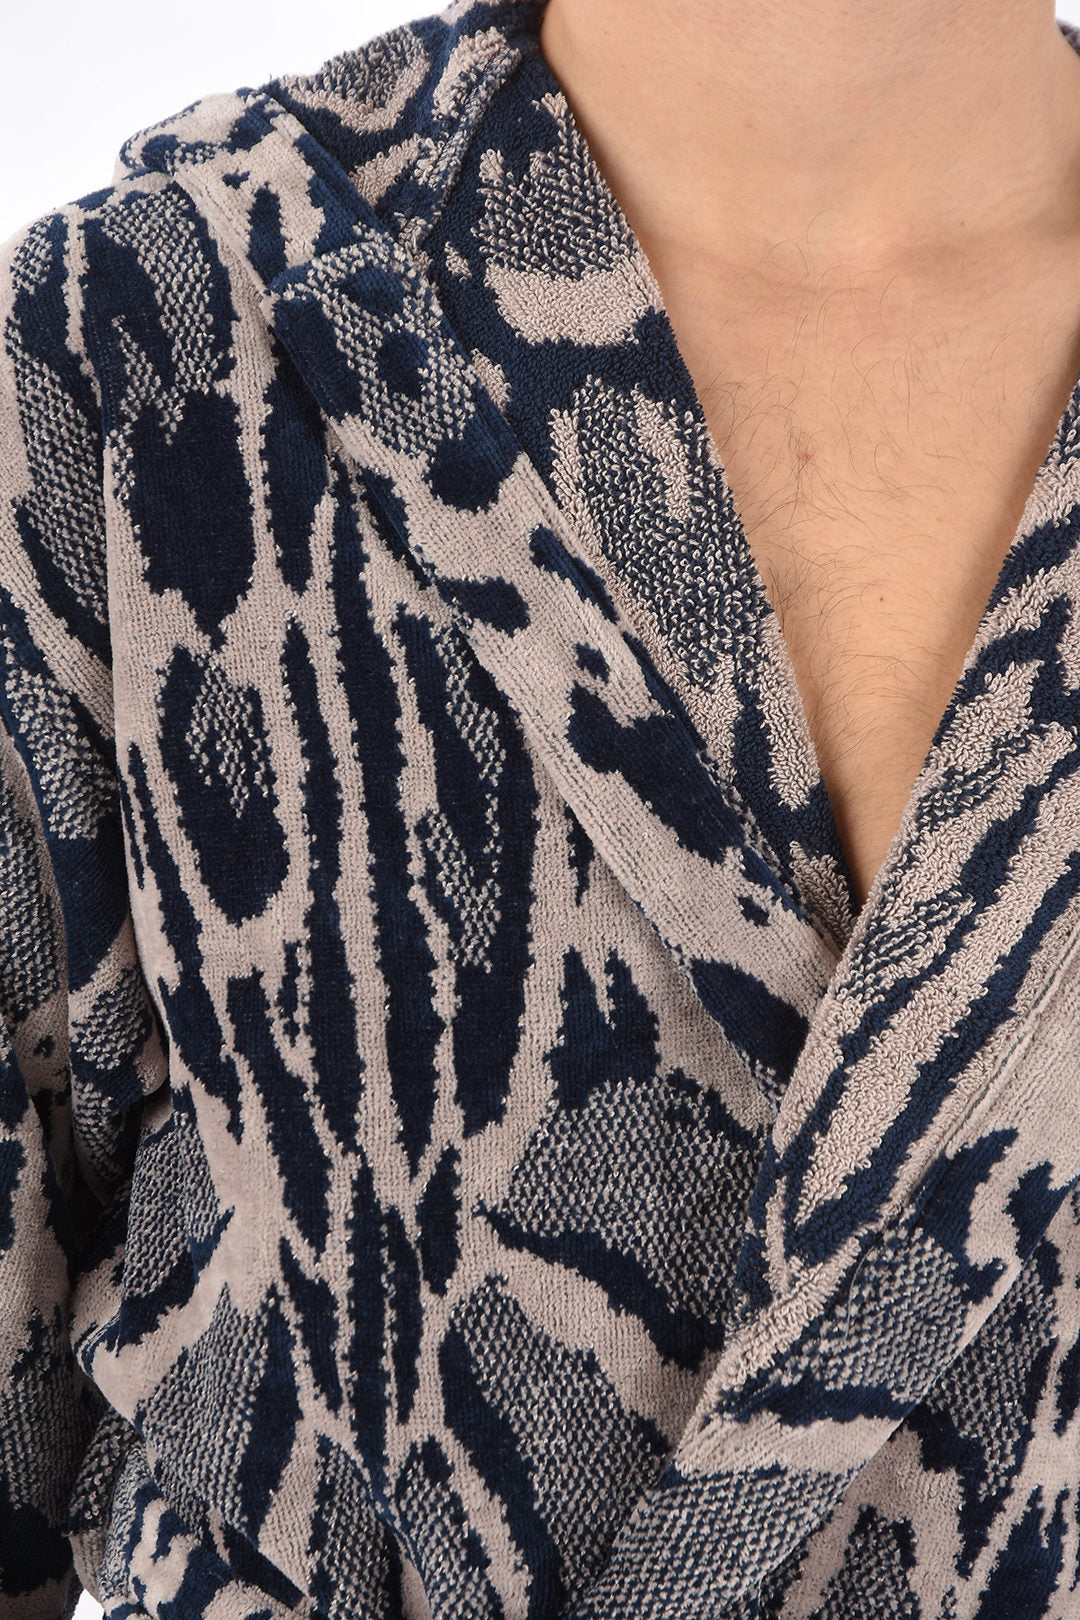 Home animal print cotton bathrobe with hood blue